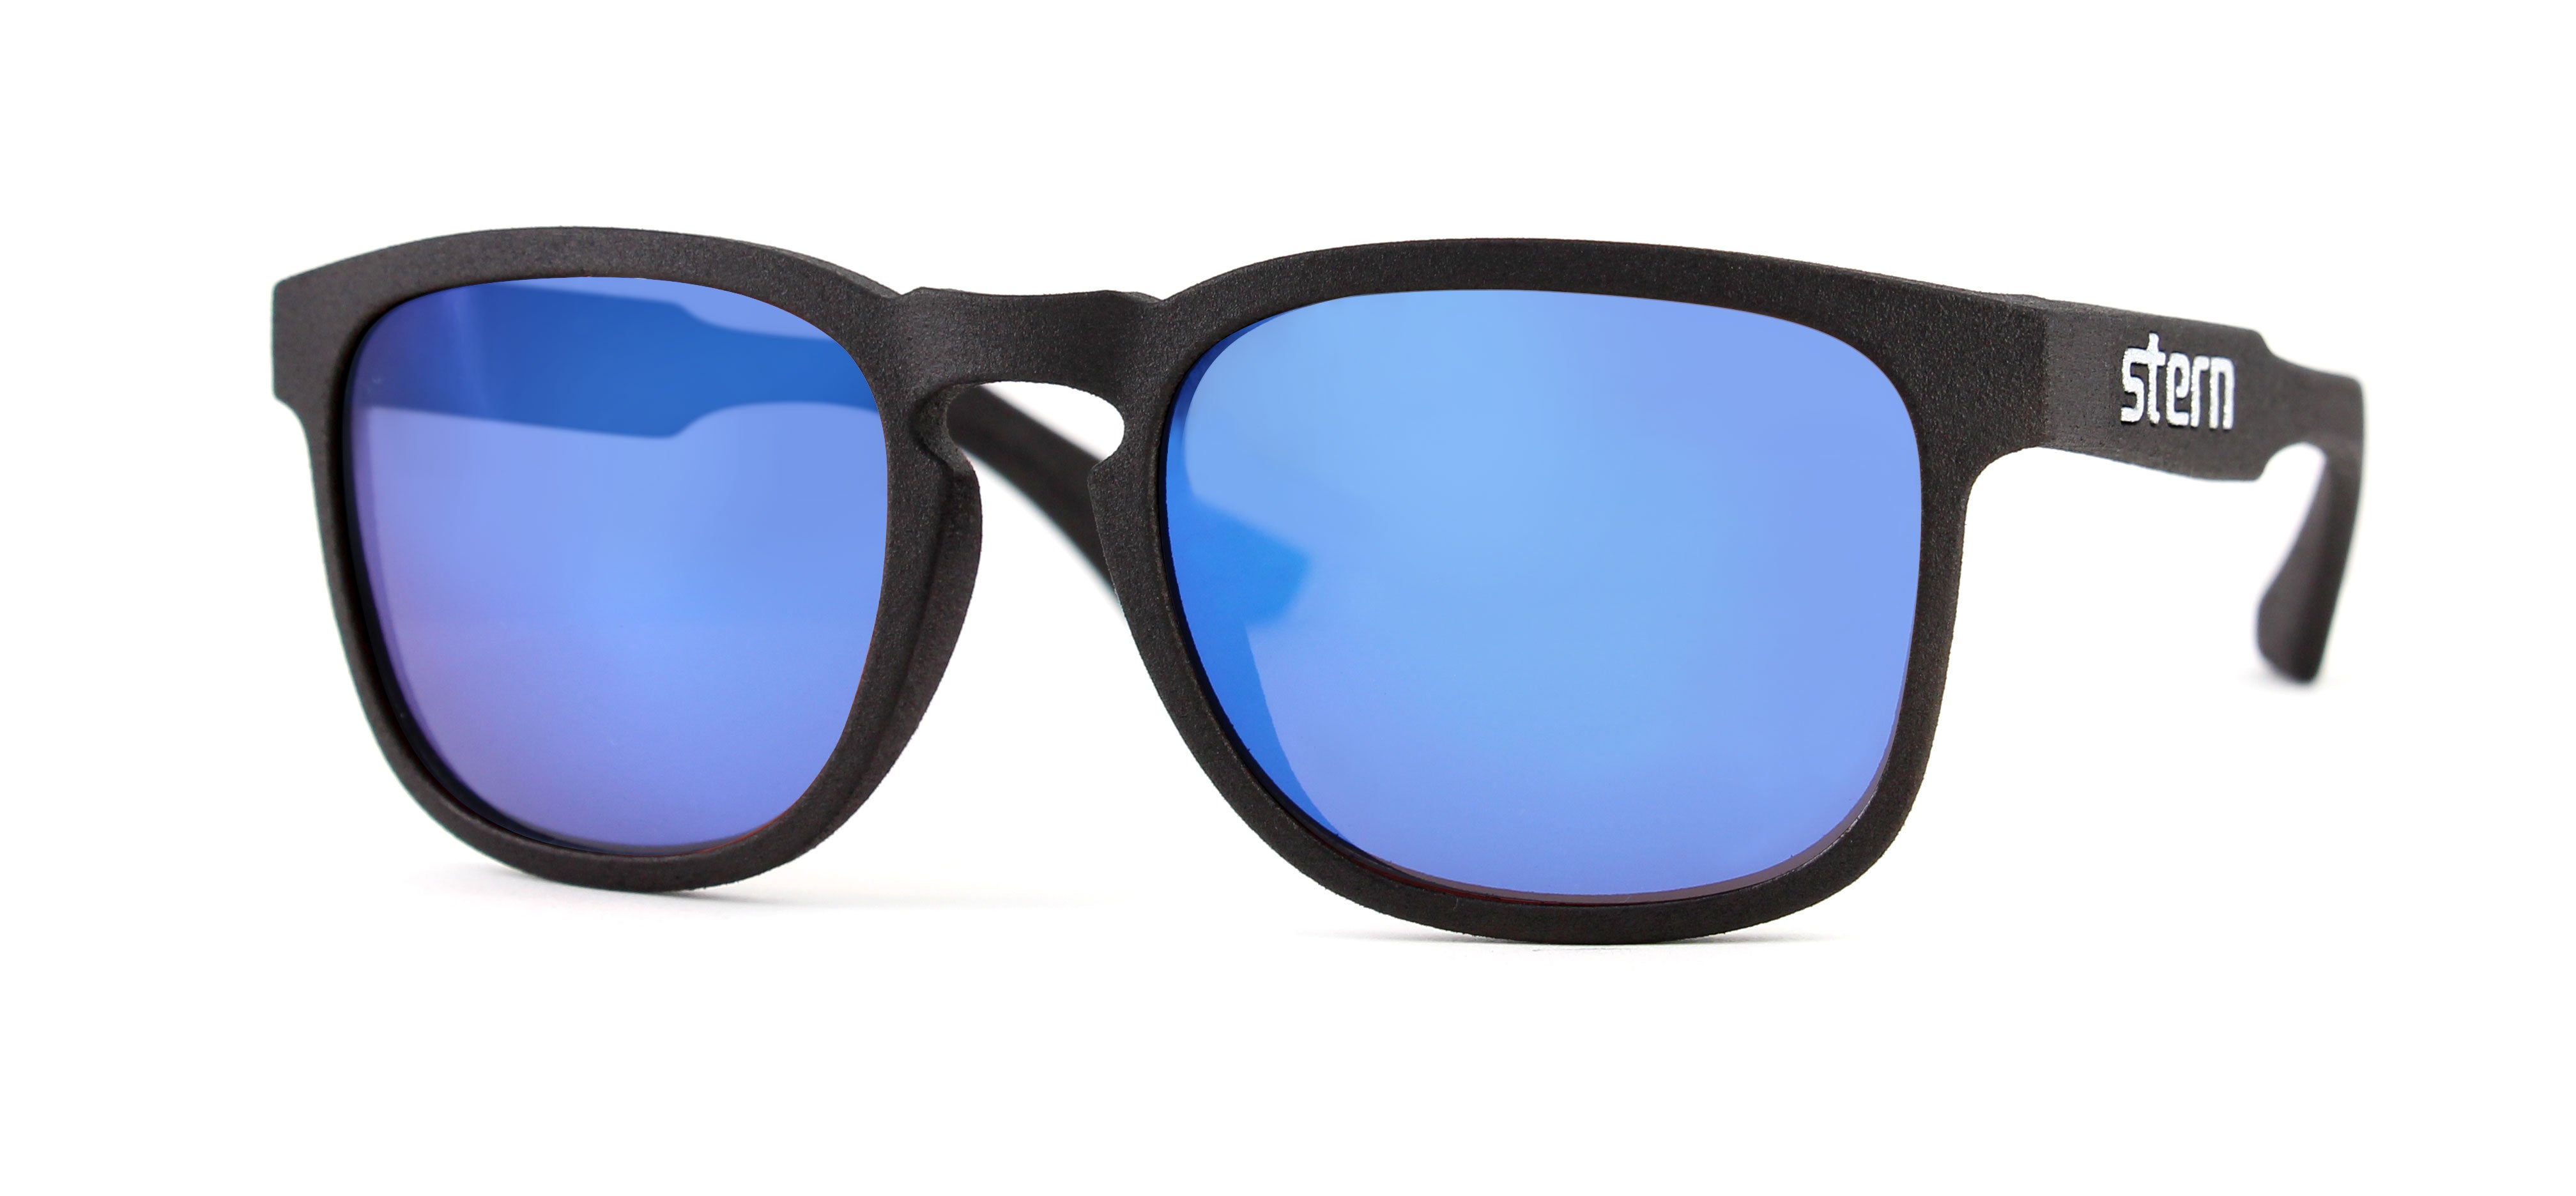 Lifestyle Sunglasses - Stern Optics